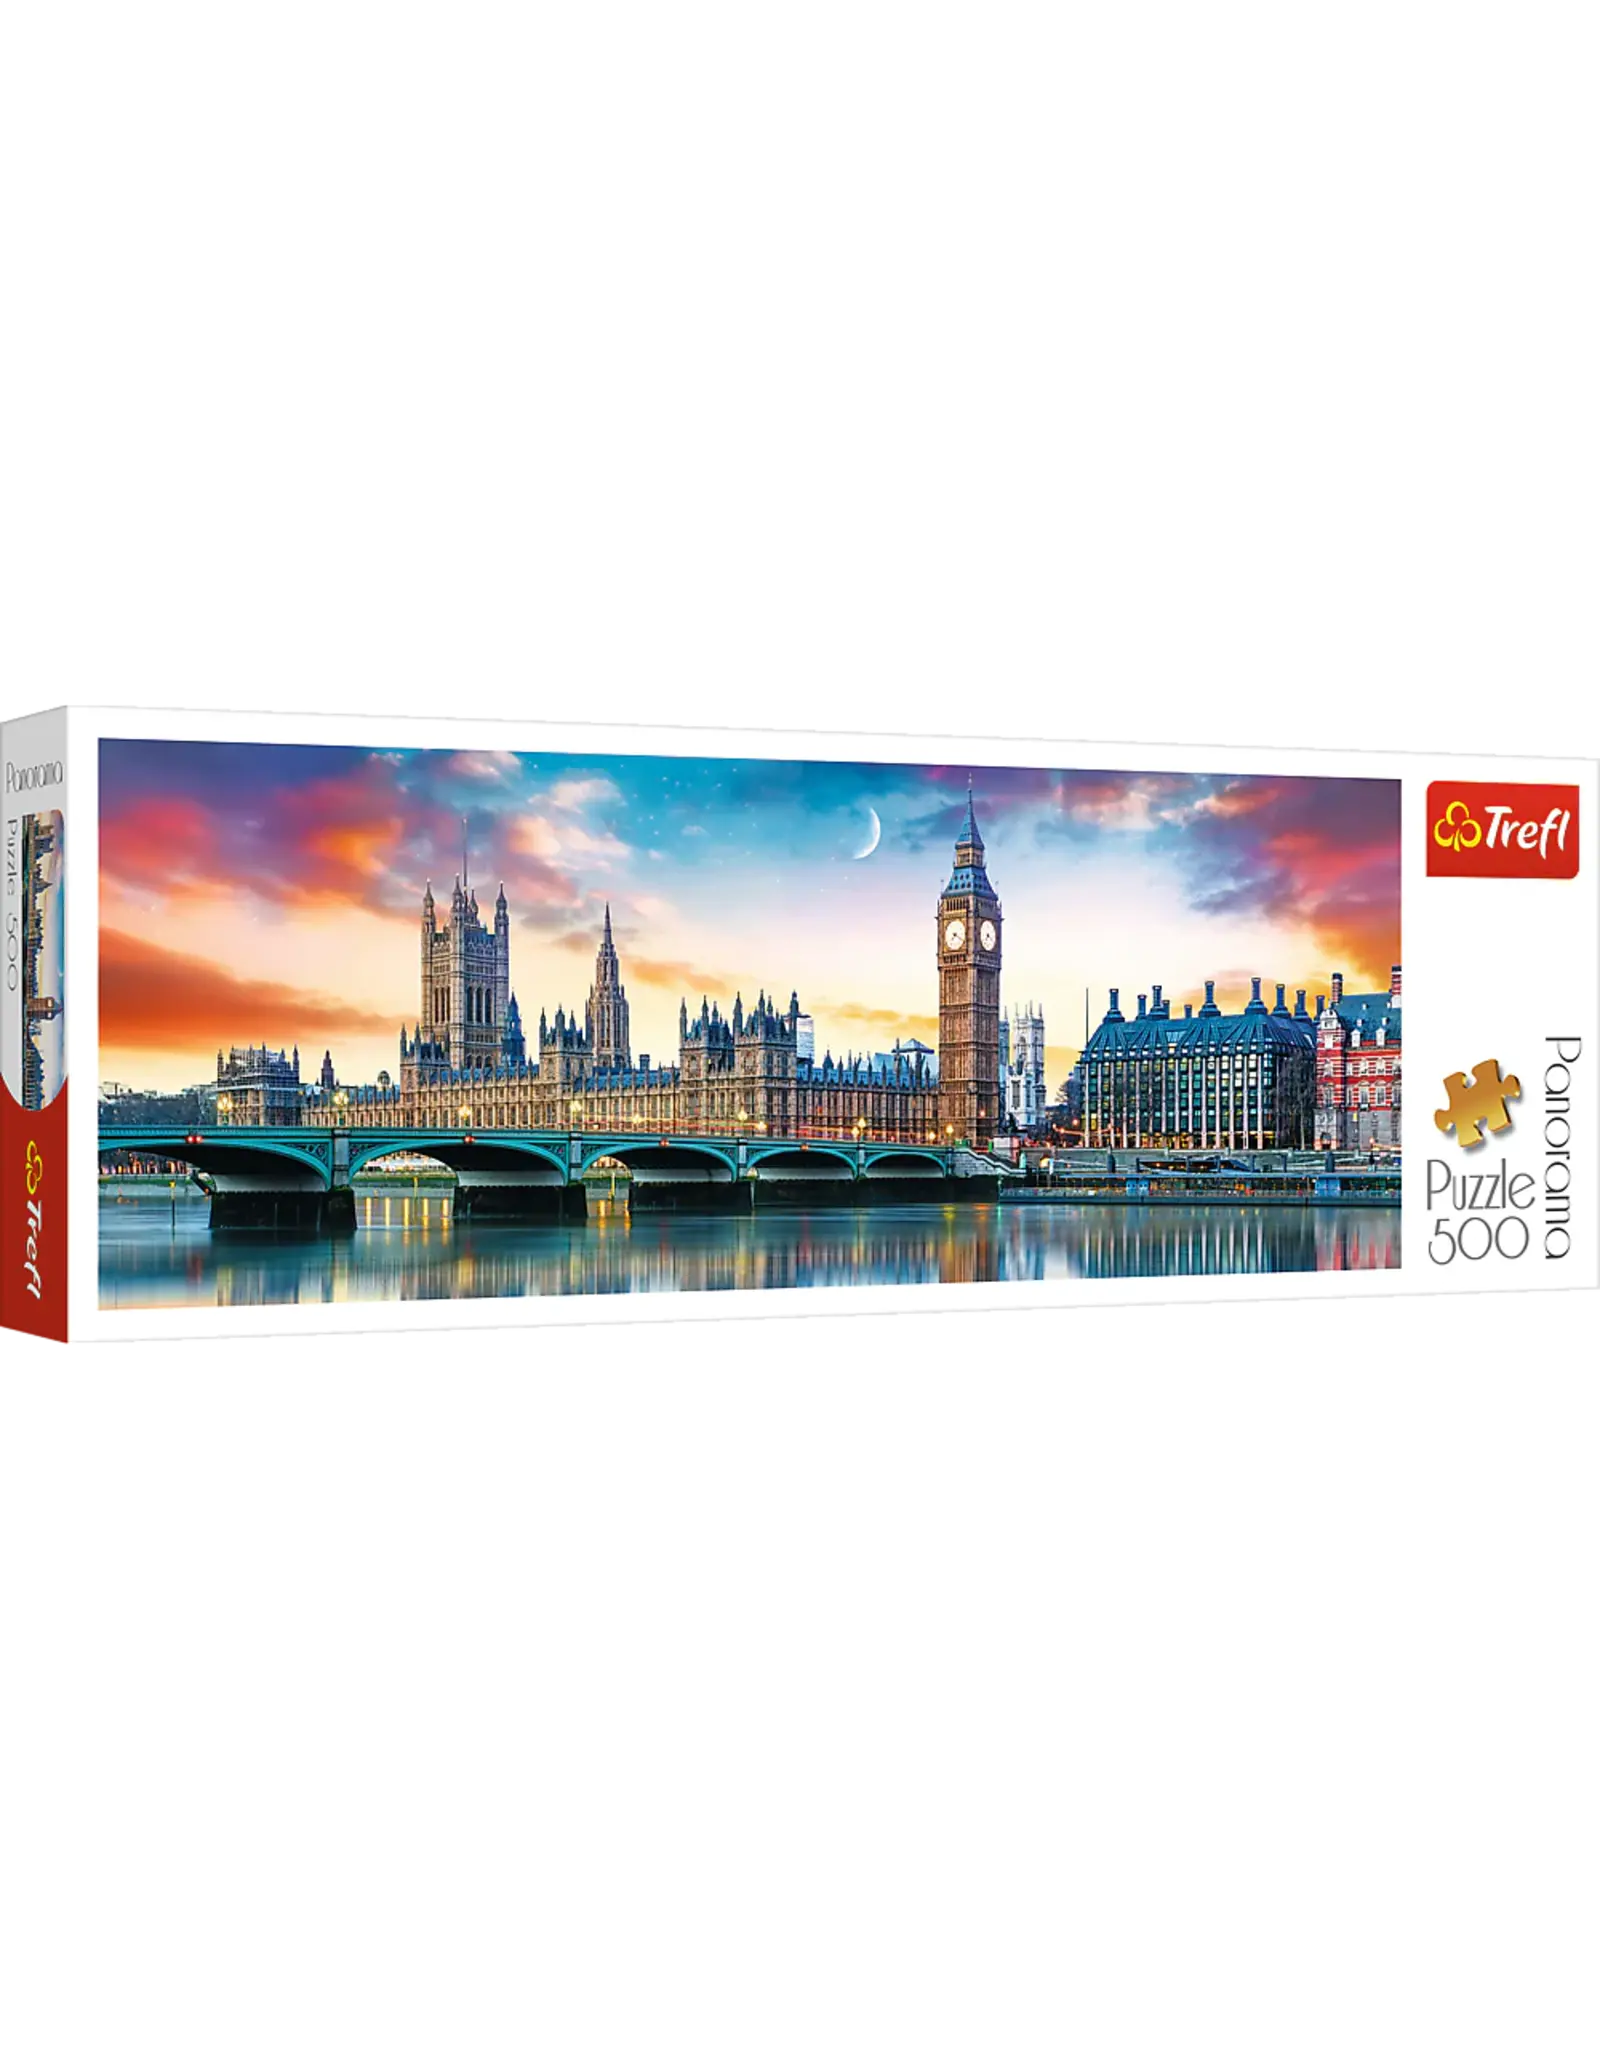 Trefl Puzzle: Big Ben/Westminster Palace 500pc